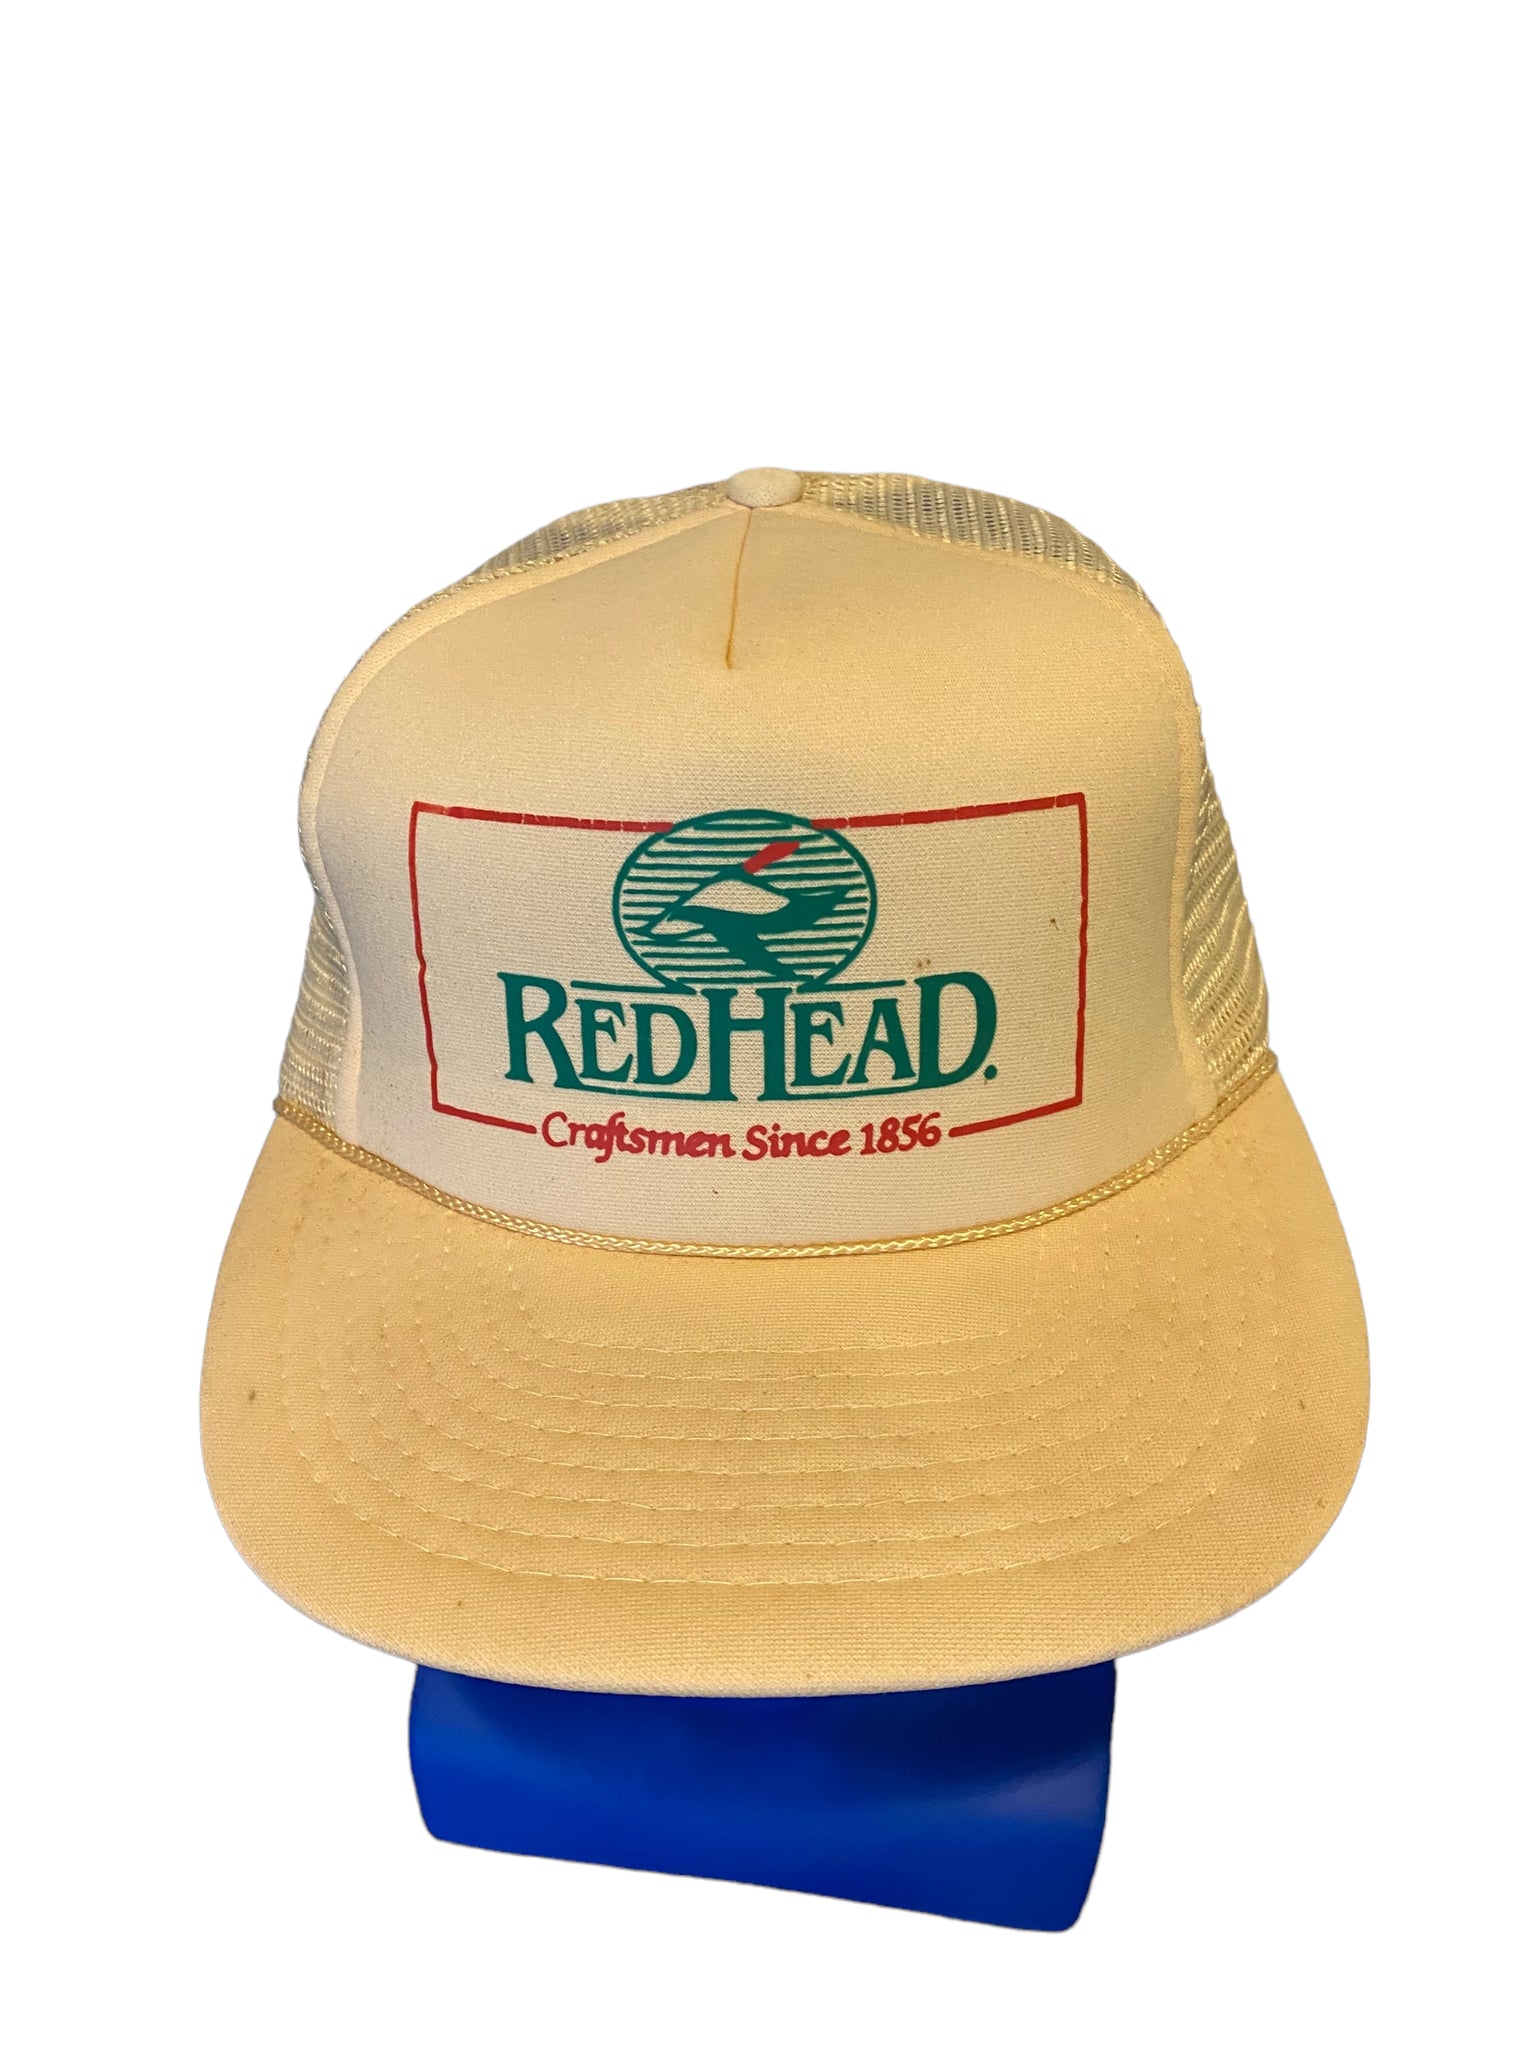 Vintage RedHead hat cap Made USA snapback Craftsmen Since 1856 beige